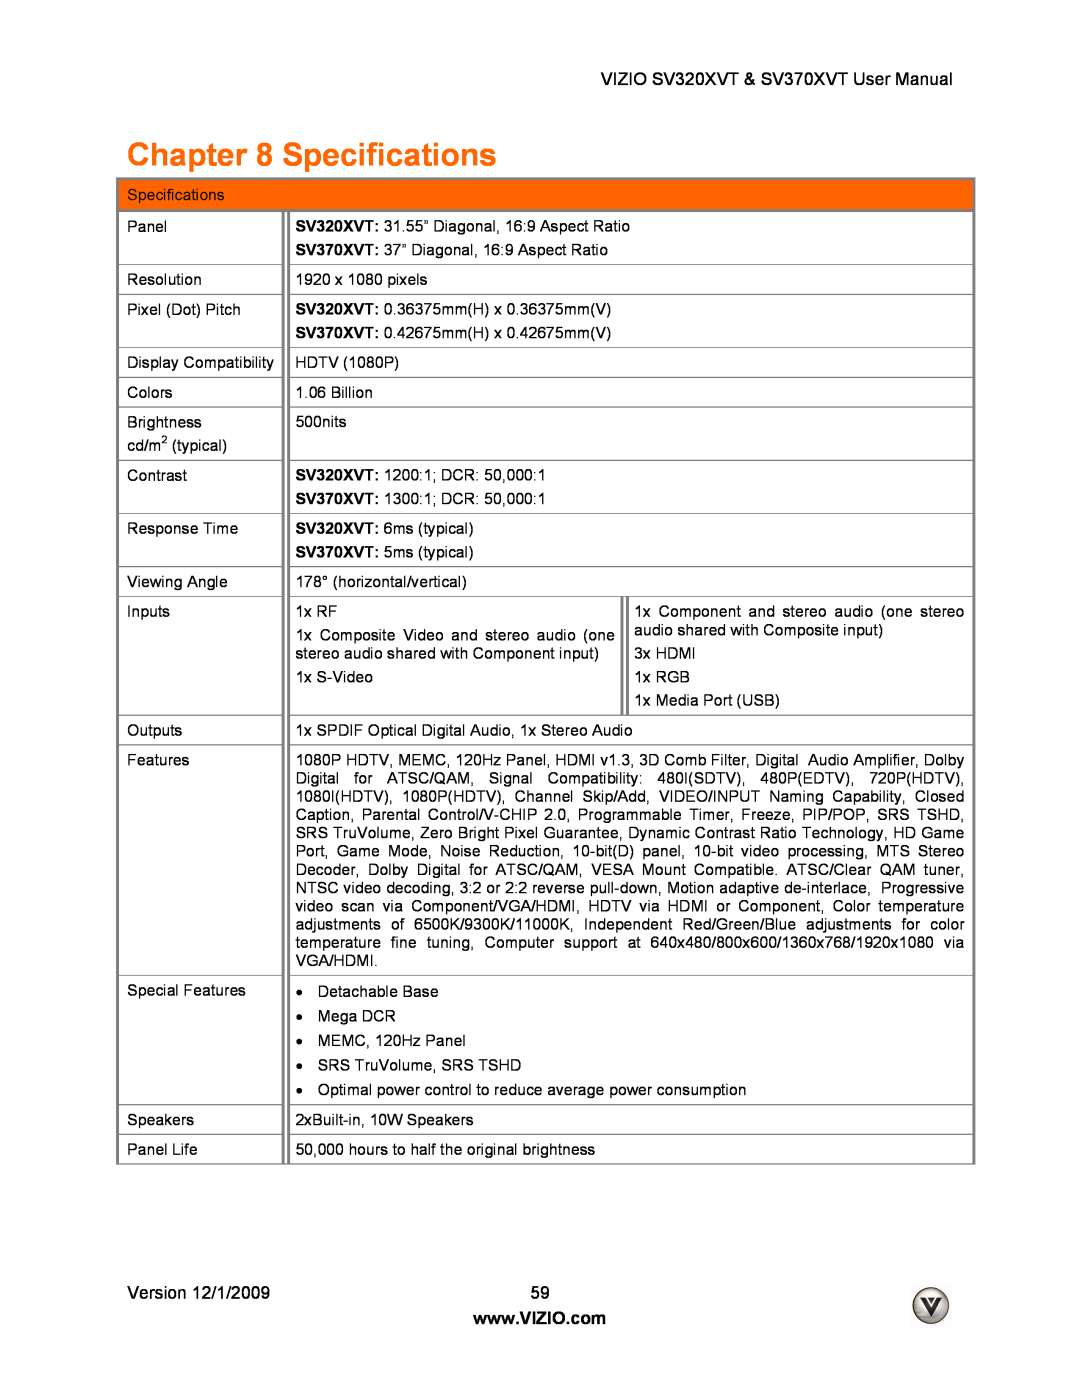 Vizio user manual Specifications, VIZIO SV320XVT & SV370XVT User Manual, Version 12/1/2009 